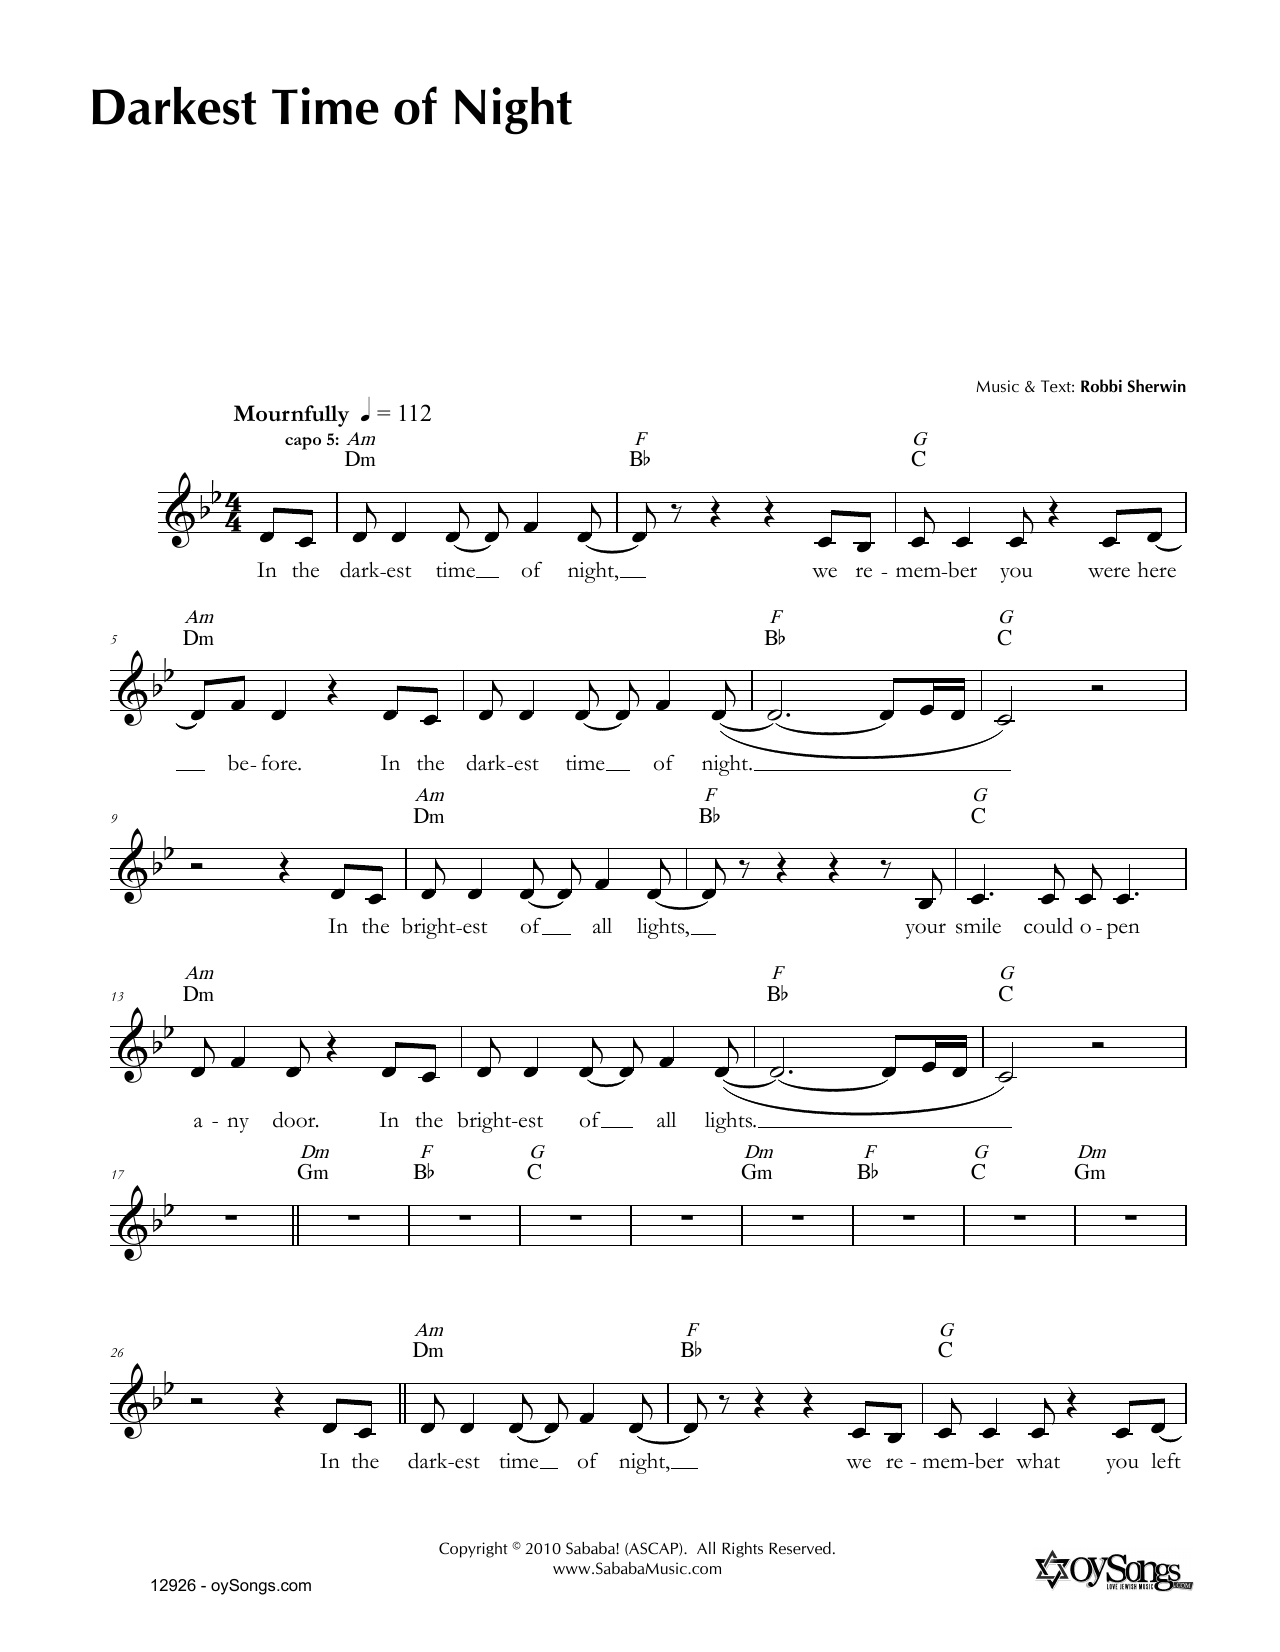 Robbi Sherwin Darkest Time of Night Sheet Music Notes & Chords for Melody Line, Lyrics & Chords - Download or Print PDF